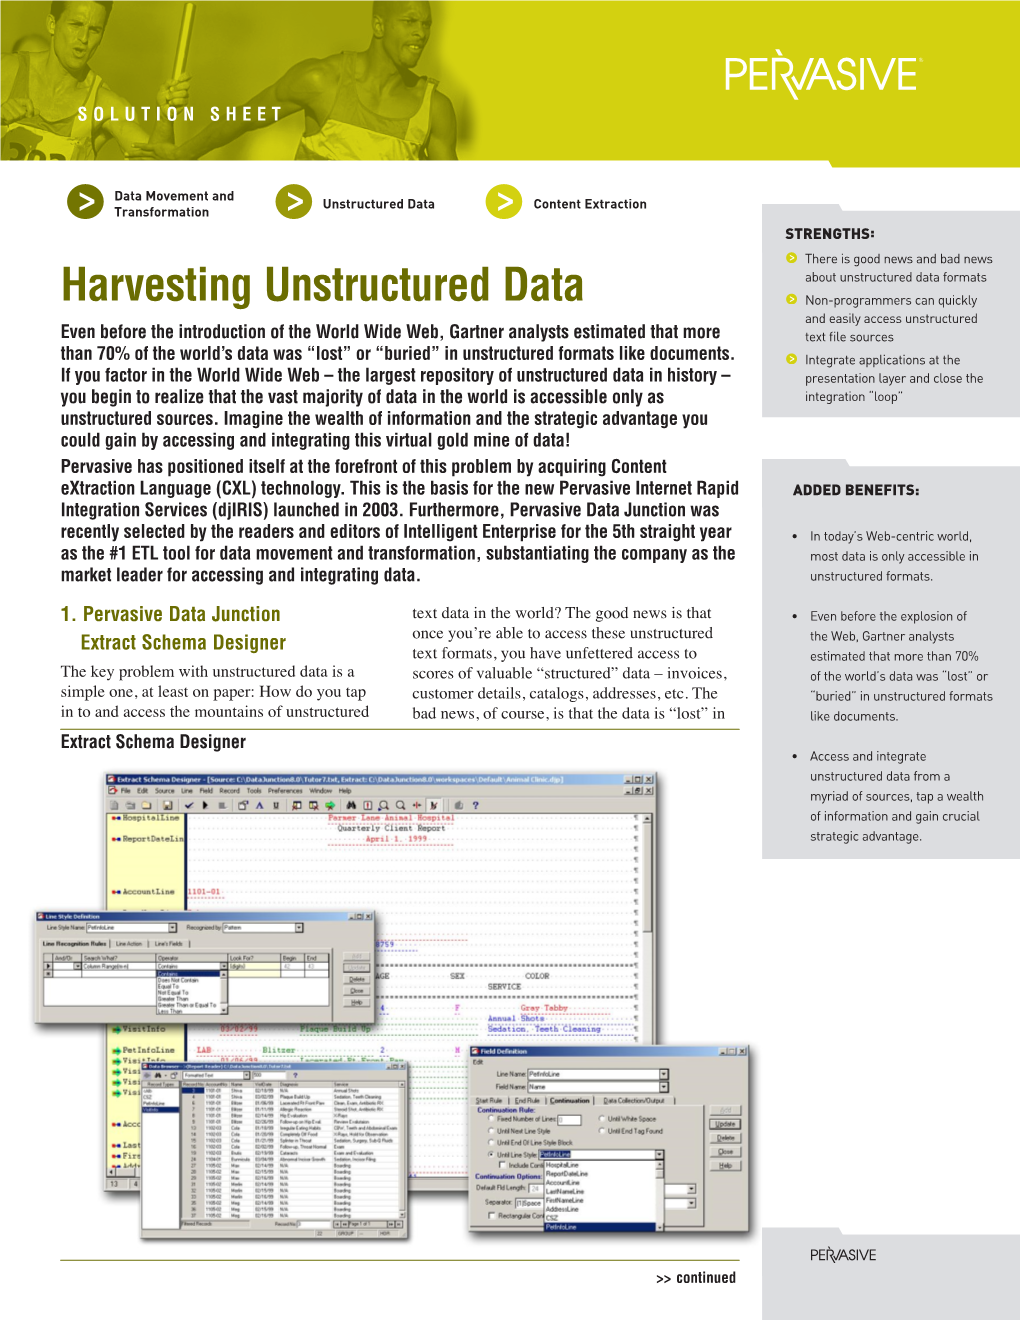 Harvesting Unstructured Data